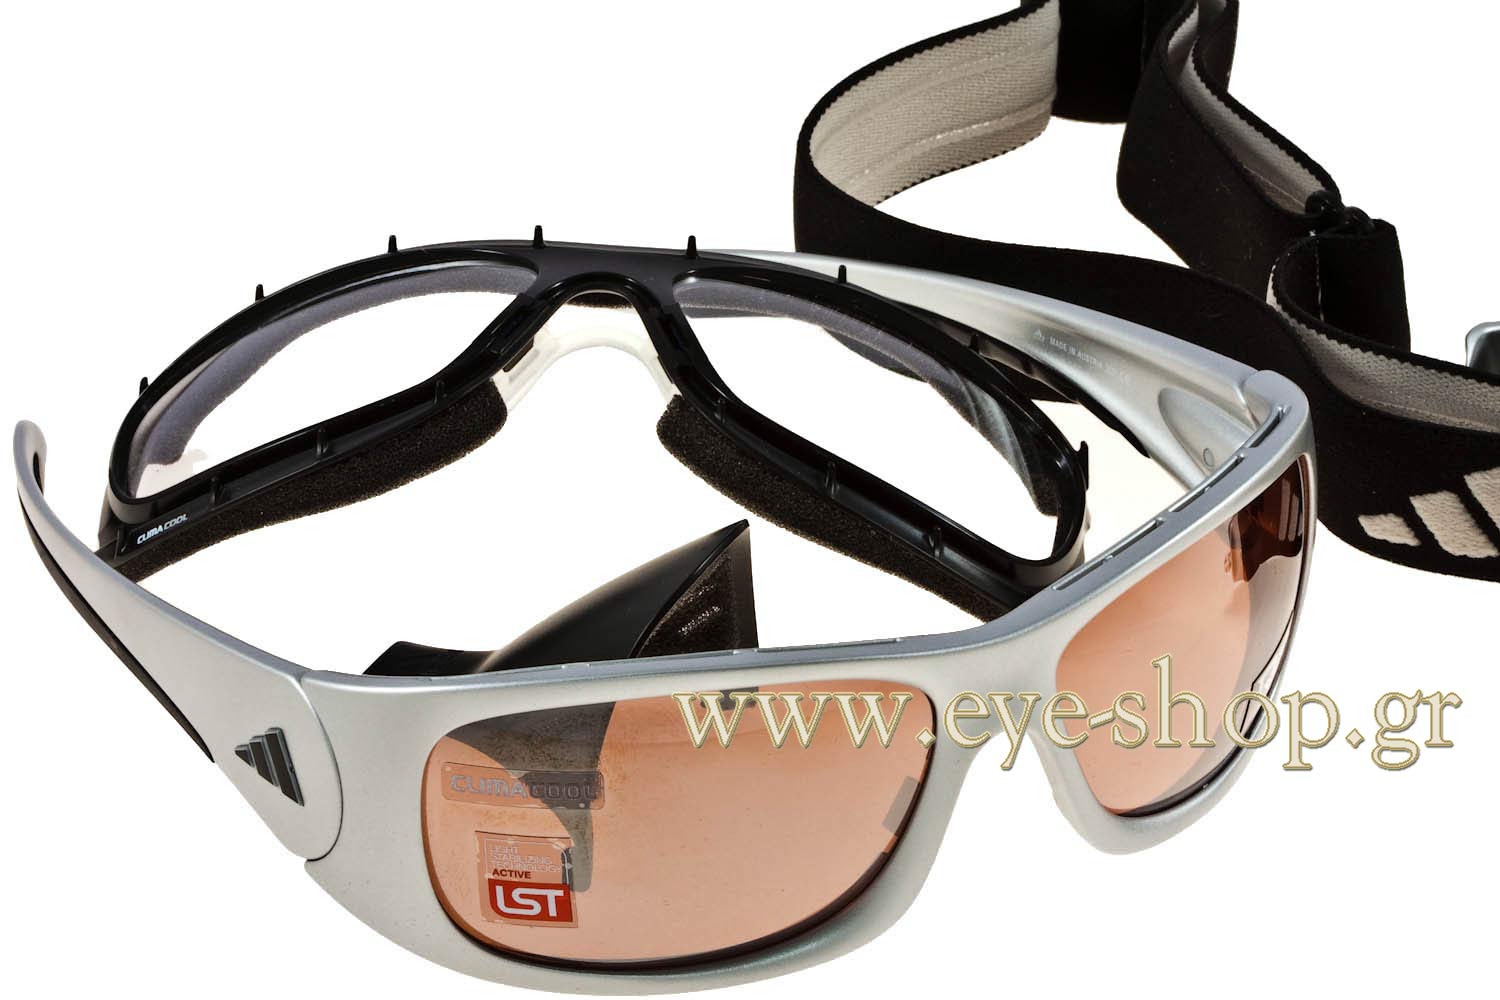 leninismo En Vivo Gracioso thomas-huber-wearing-sunglasses-adidas-terrex-pro-a143.html wearing Adidas  sunglasses at EyeShop